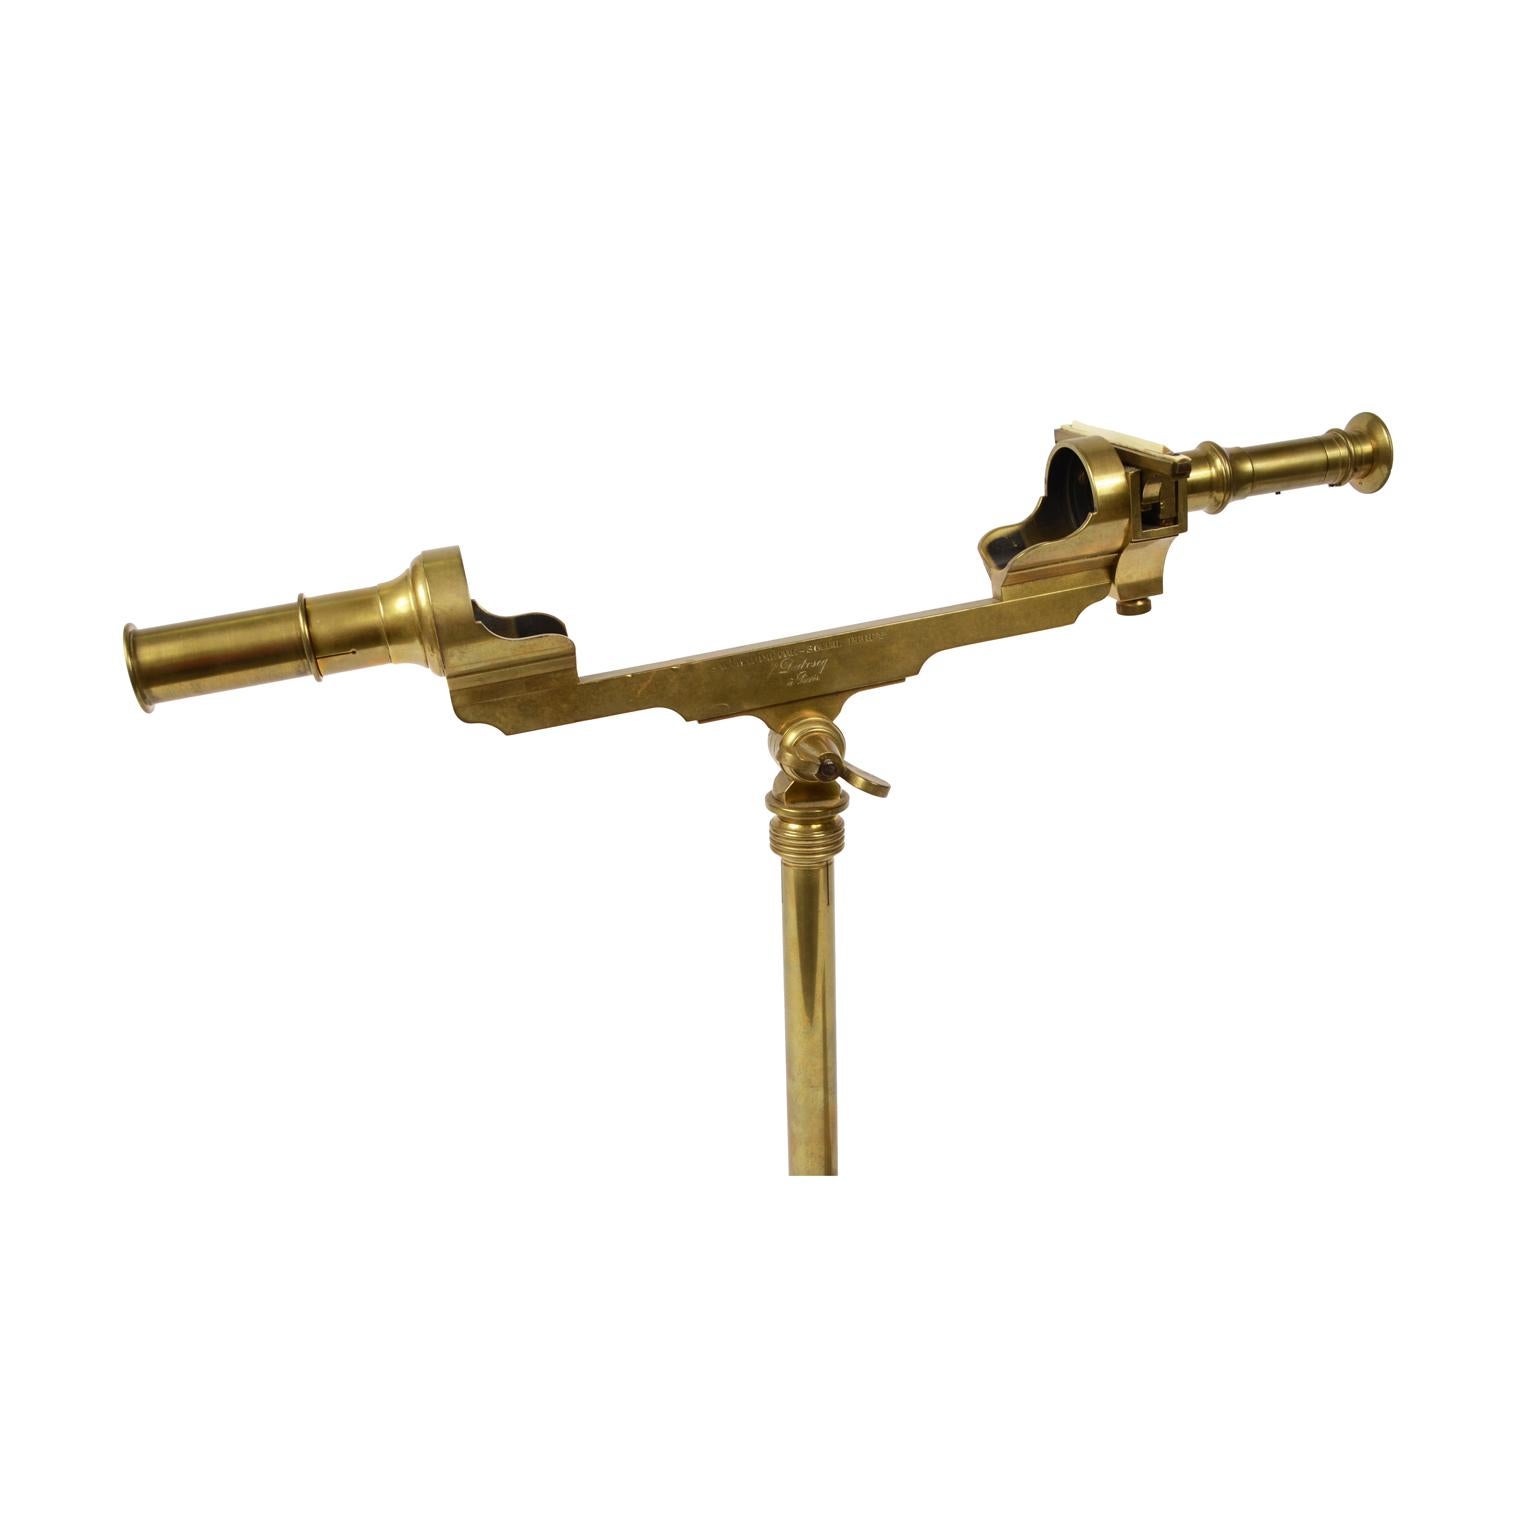 Mid-19th Century French Brass Duboscq Saccharimeter Antique Physic Instrument 6